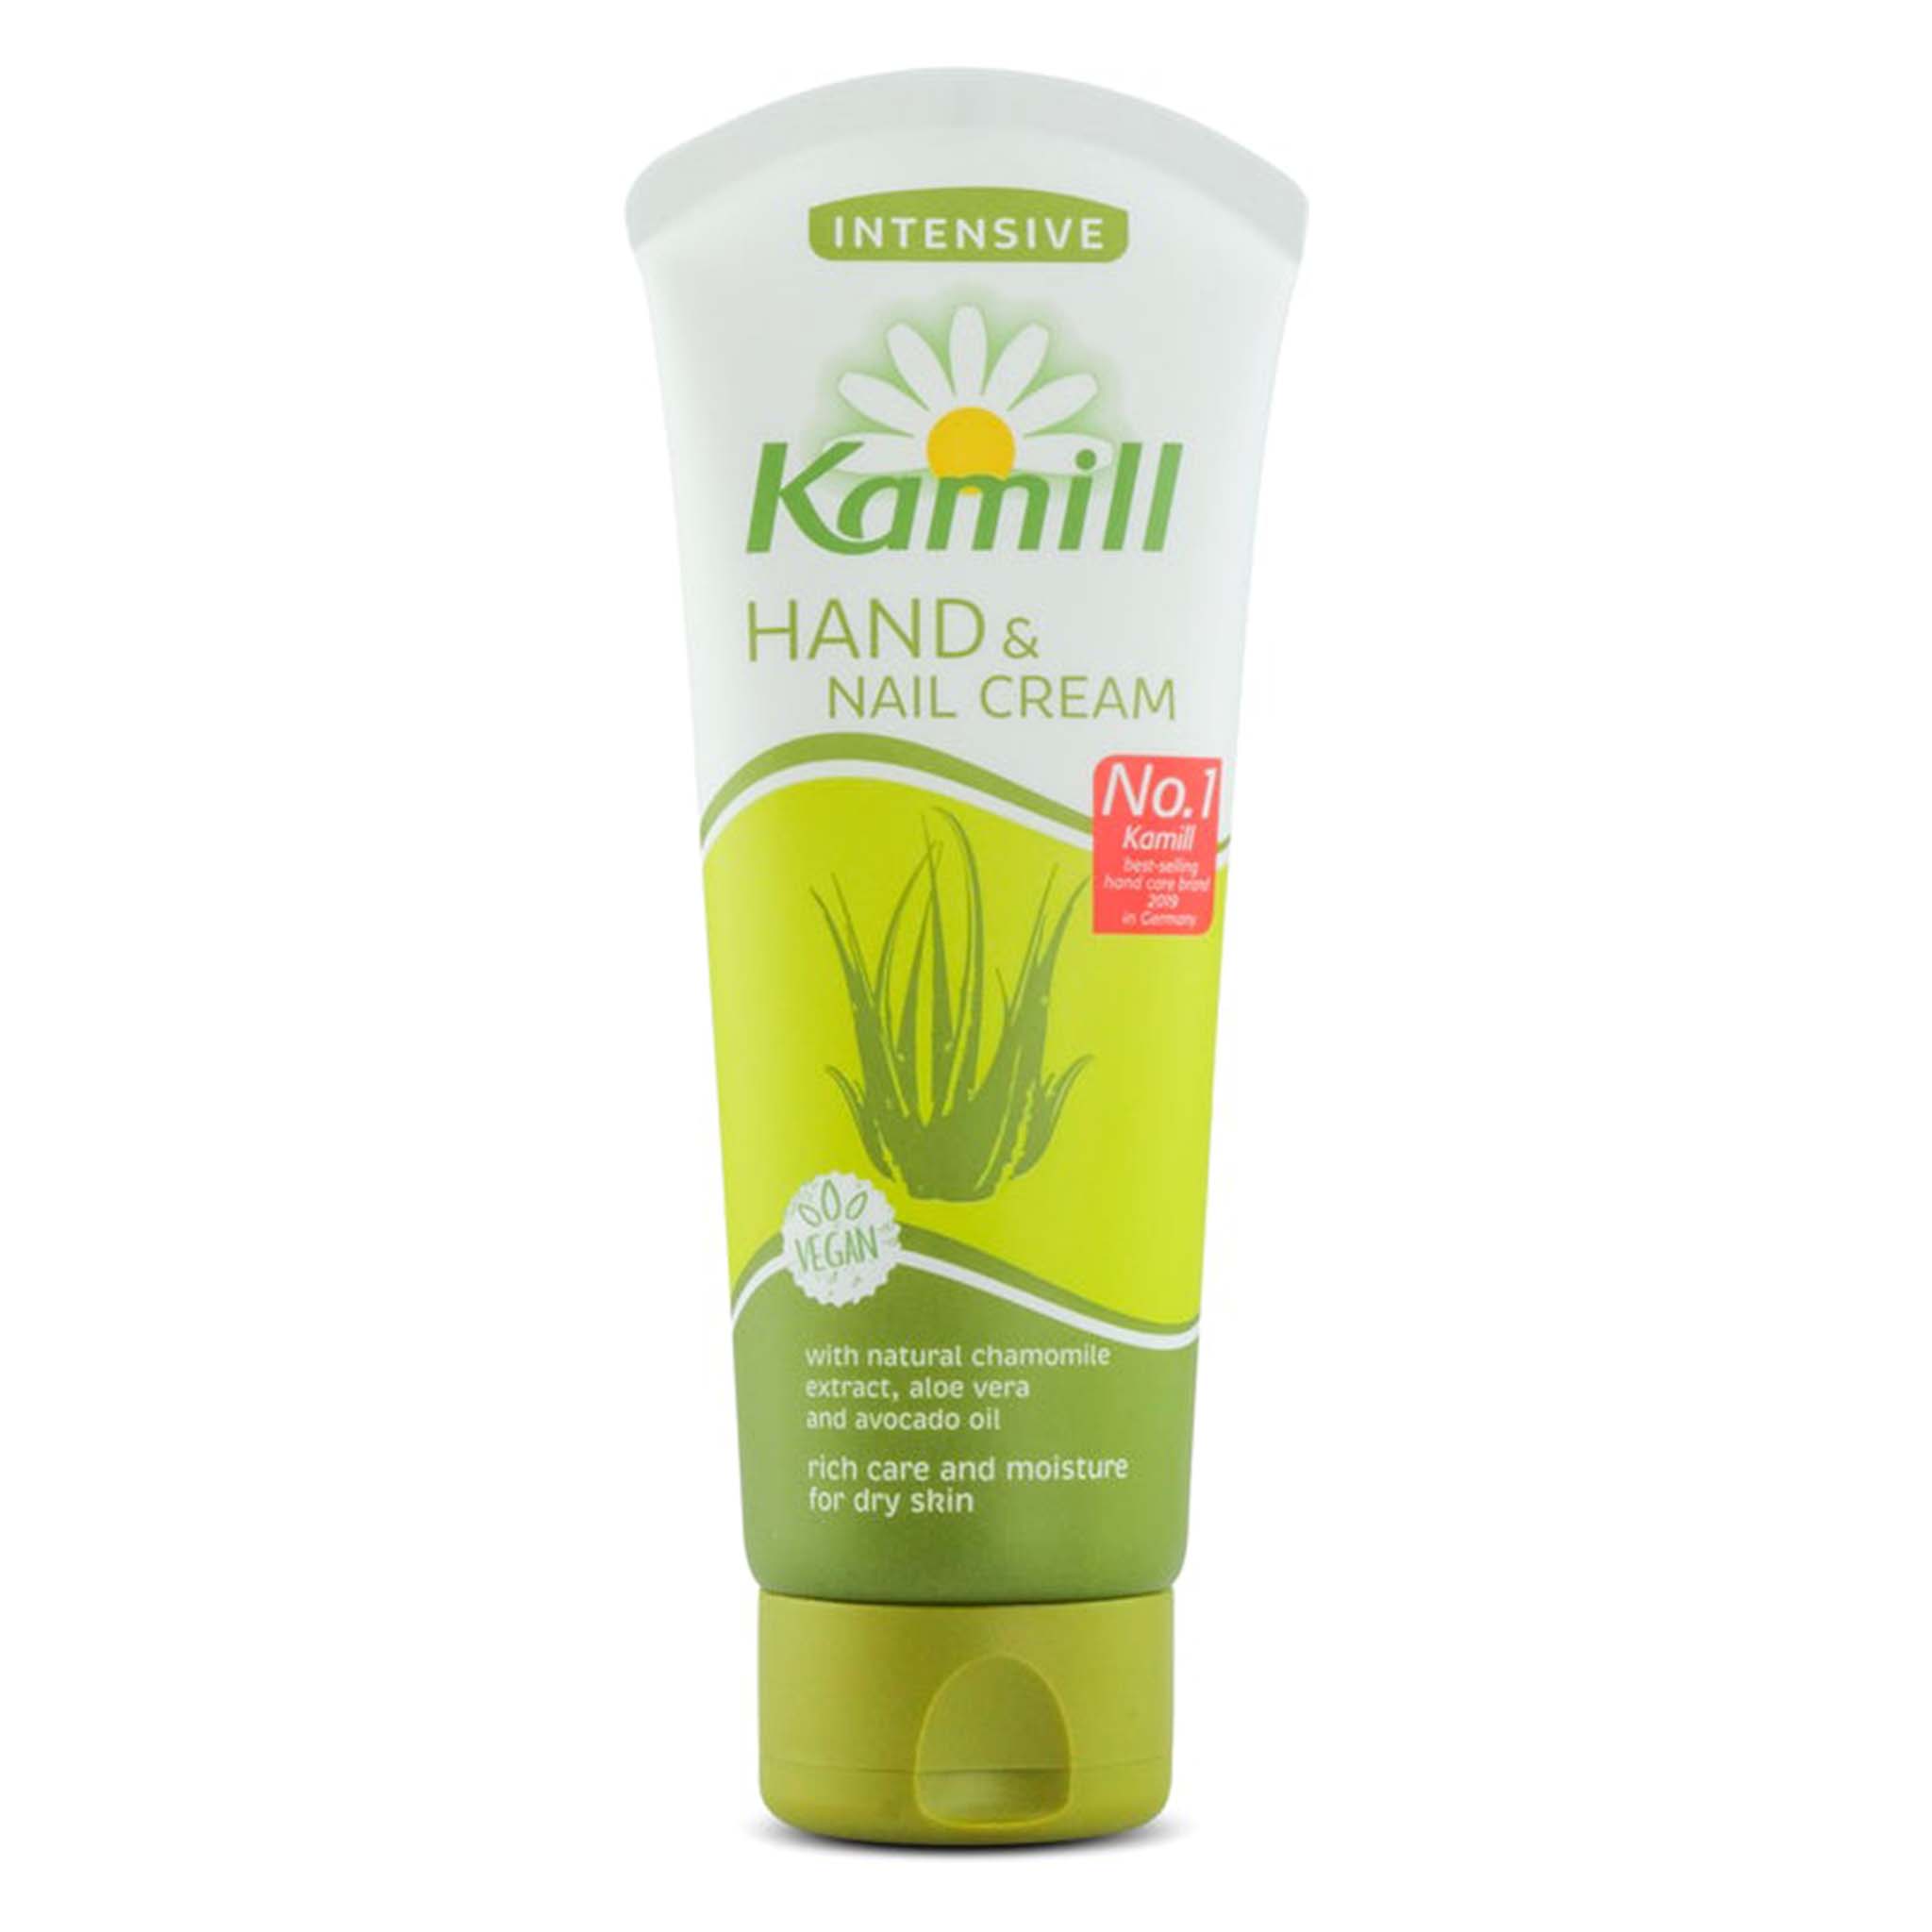 Kamill Hand and Nail Cream Intensive